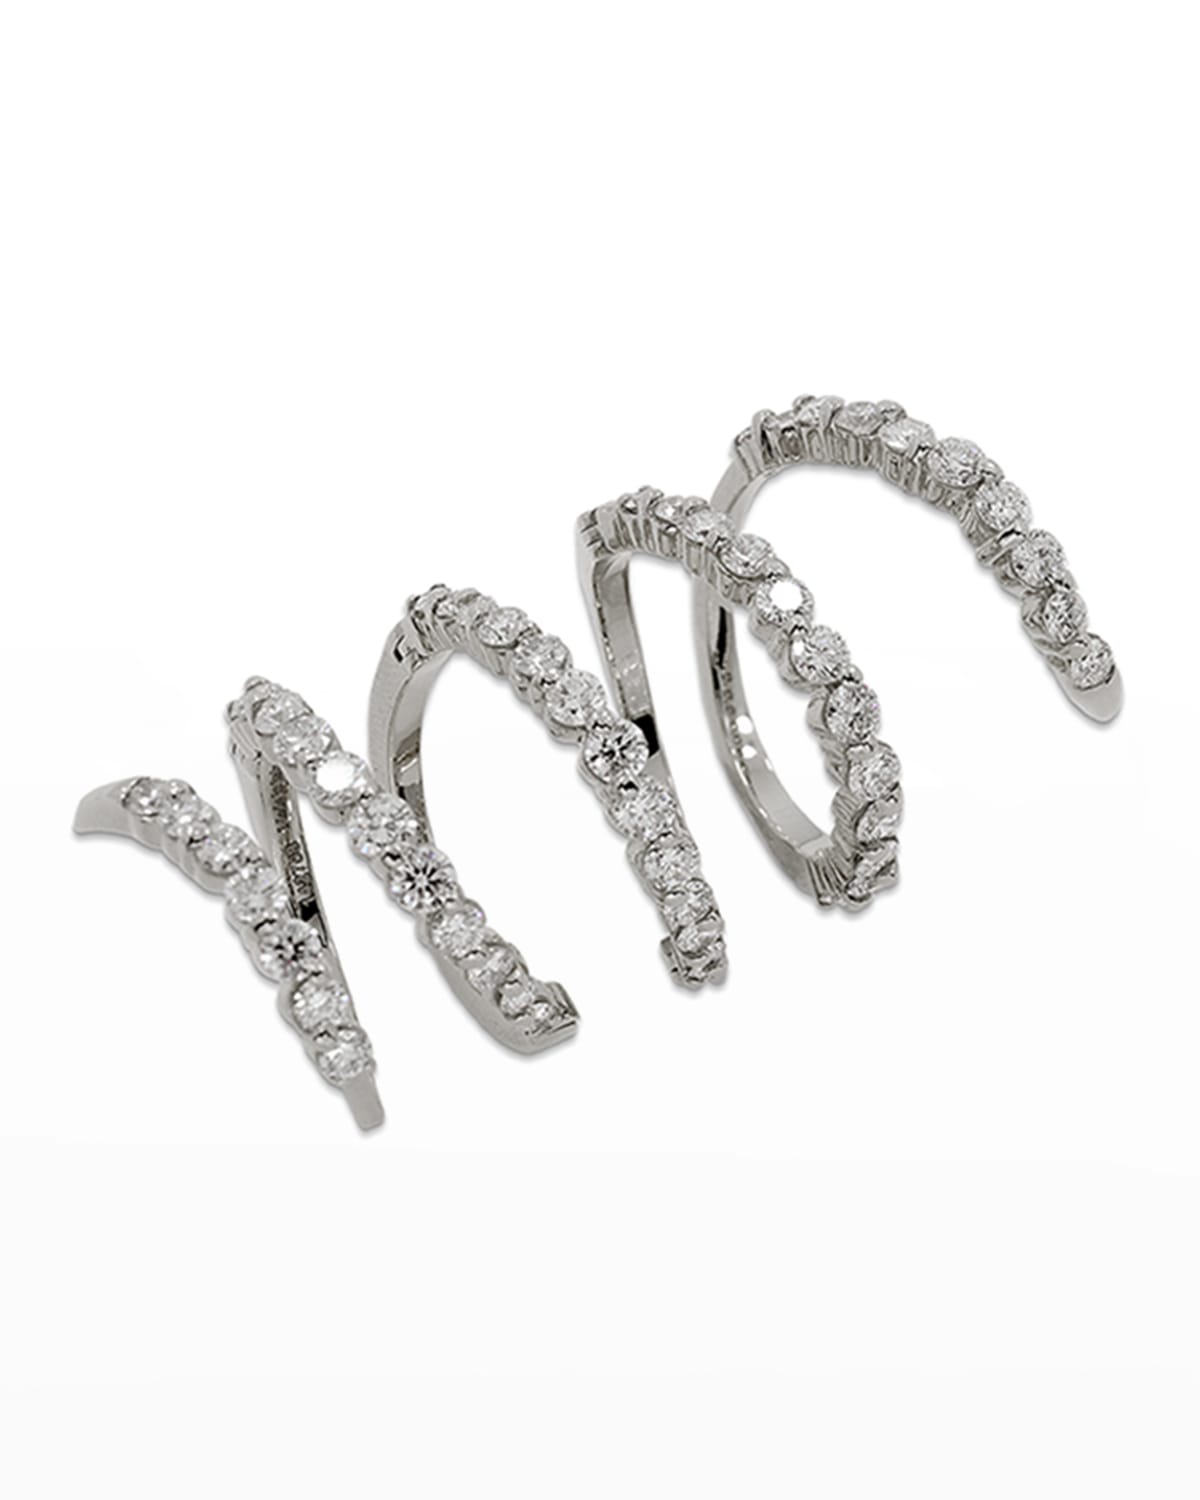 Magic Snake 18K White Gold Spiral Ring with Diamonds, Size 6.5